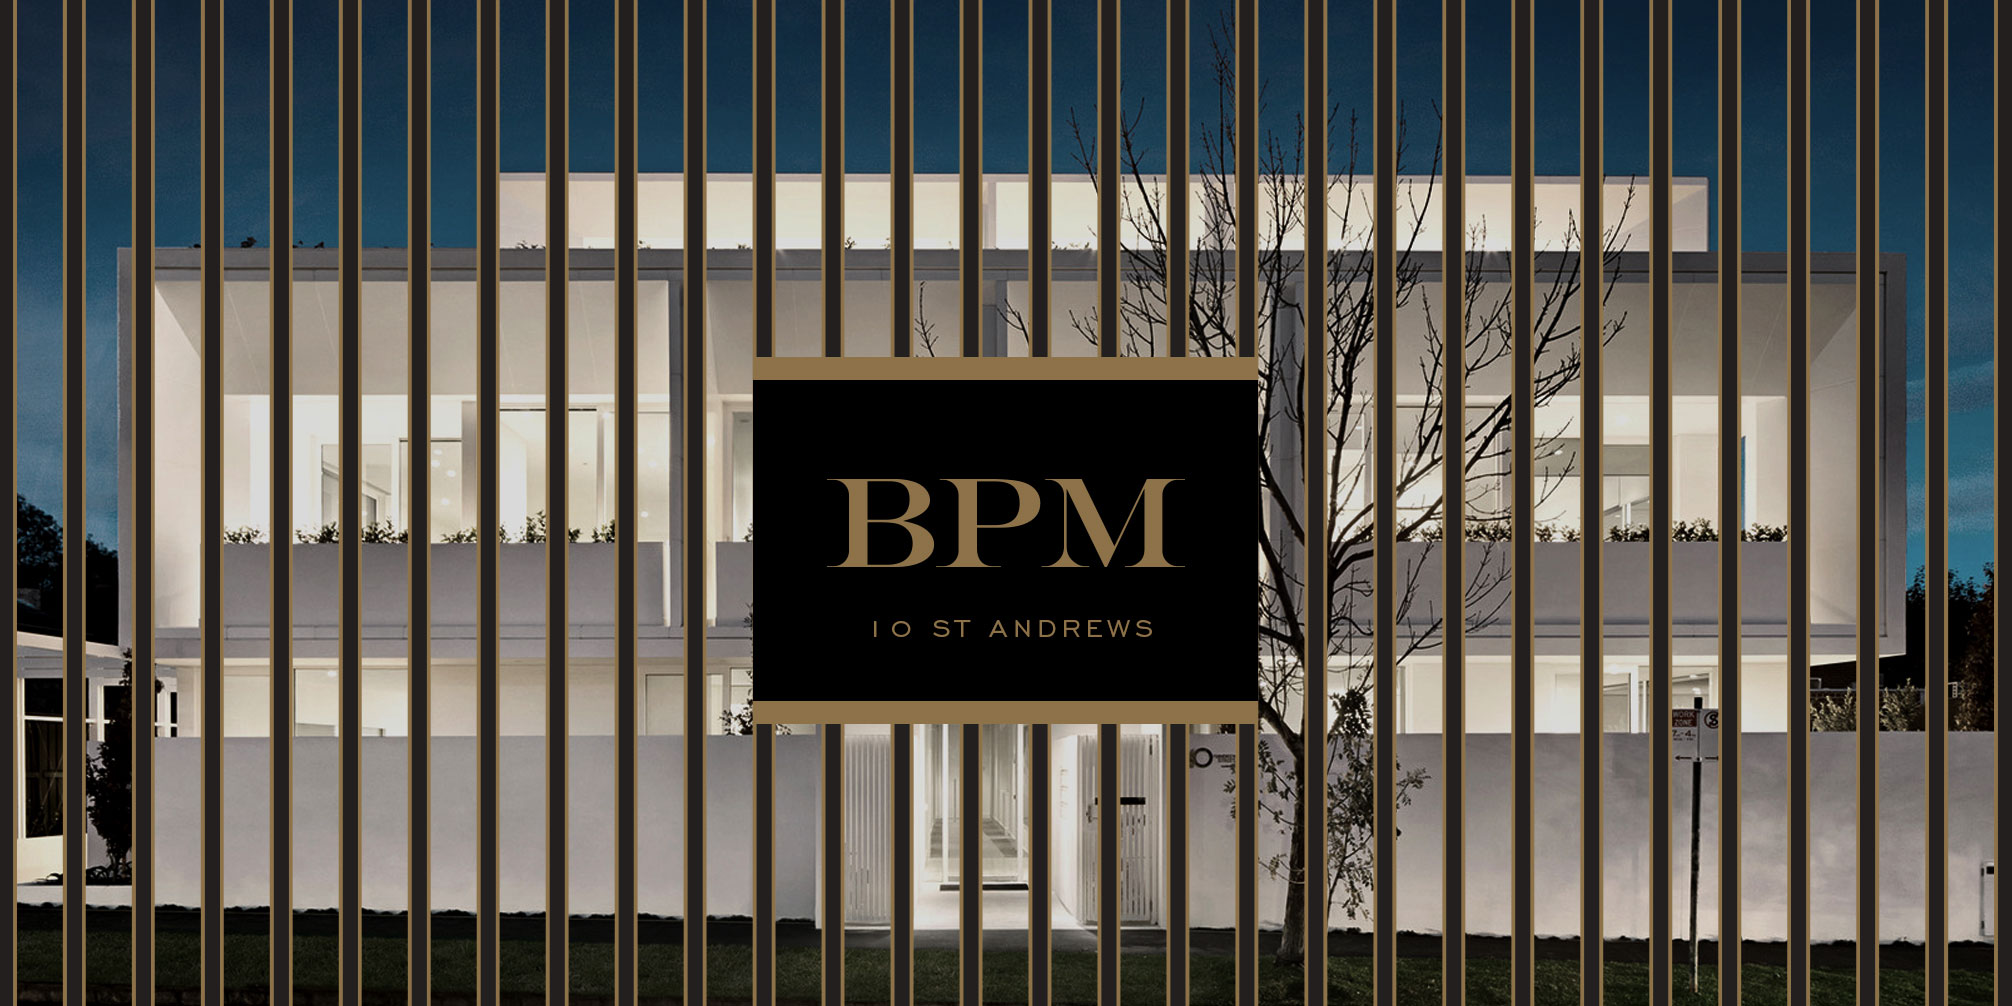 BPMCORP CORP BPM PROPERTY DEVELOPMENT MANAGEMENT CONSTRUCTION JONATHAN HALLINAN INVESTMENT MELBOURNE BRISBANE REAL ESTATE APARTMENTS ENQUIRY OFF PLAN BOUTIQUE PROJECT